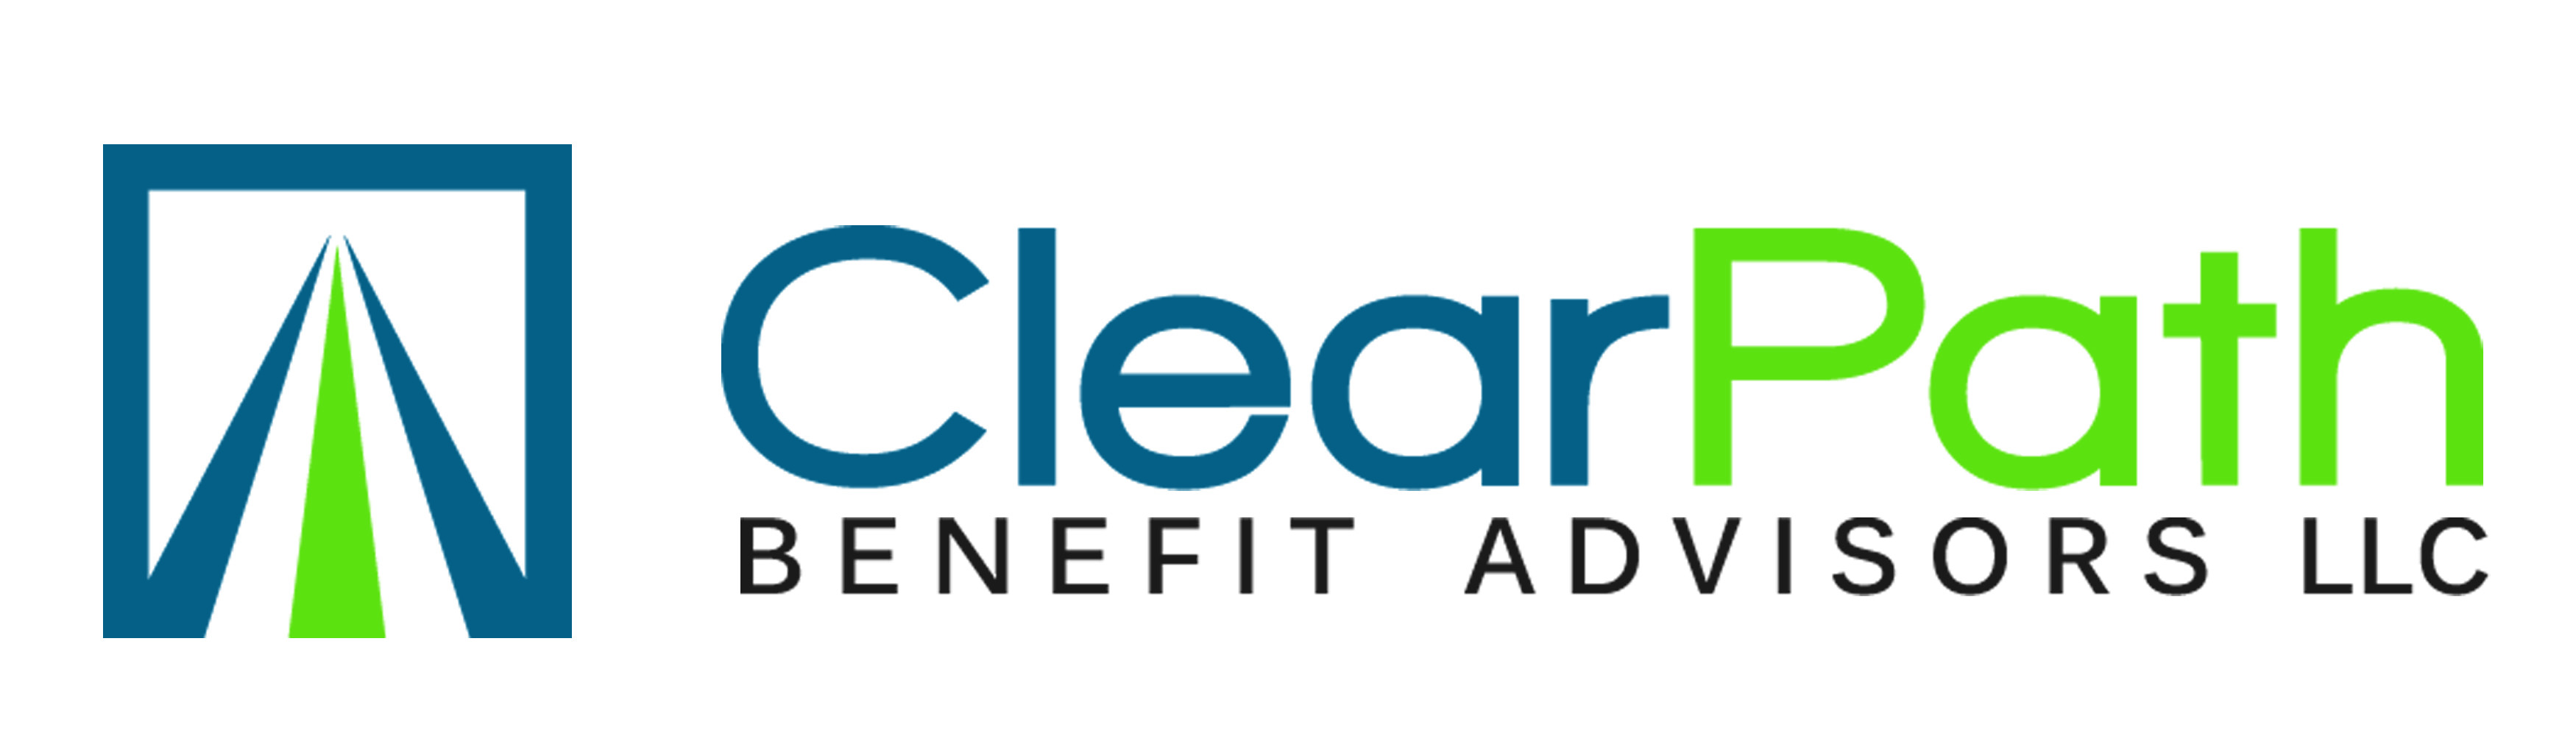 ClearPath Benefit Advisors